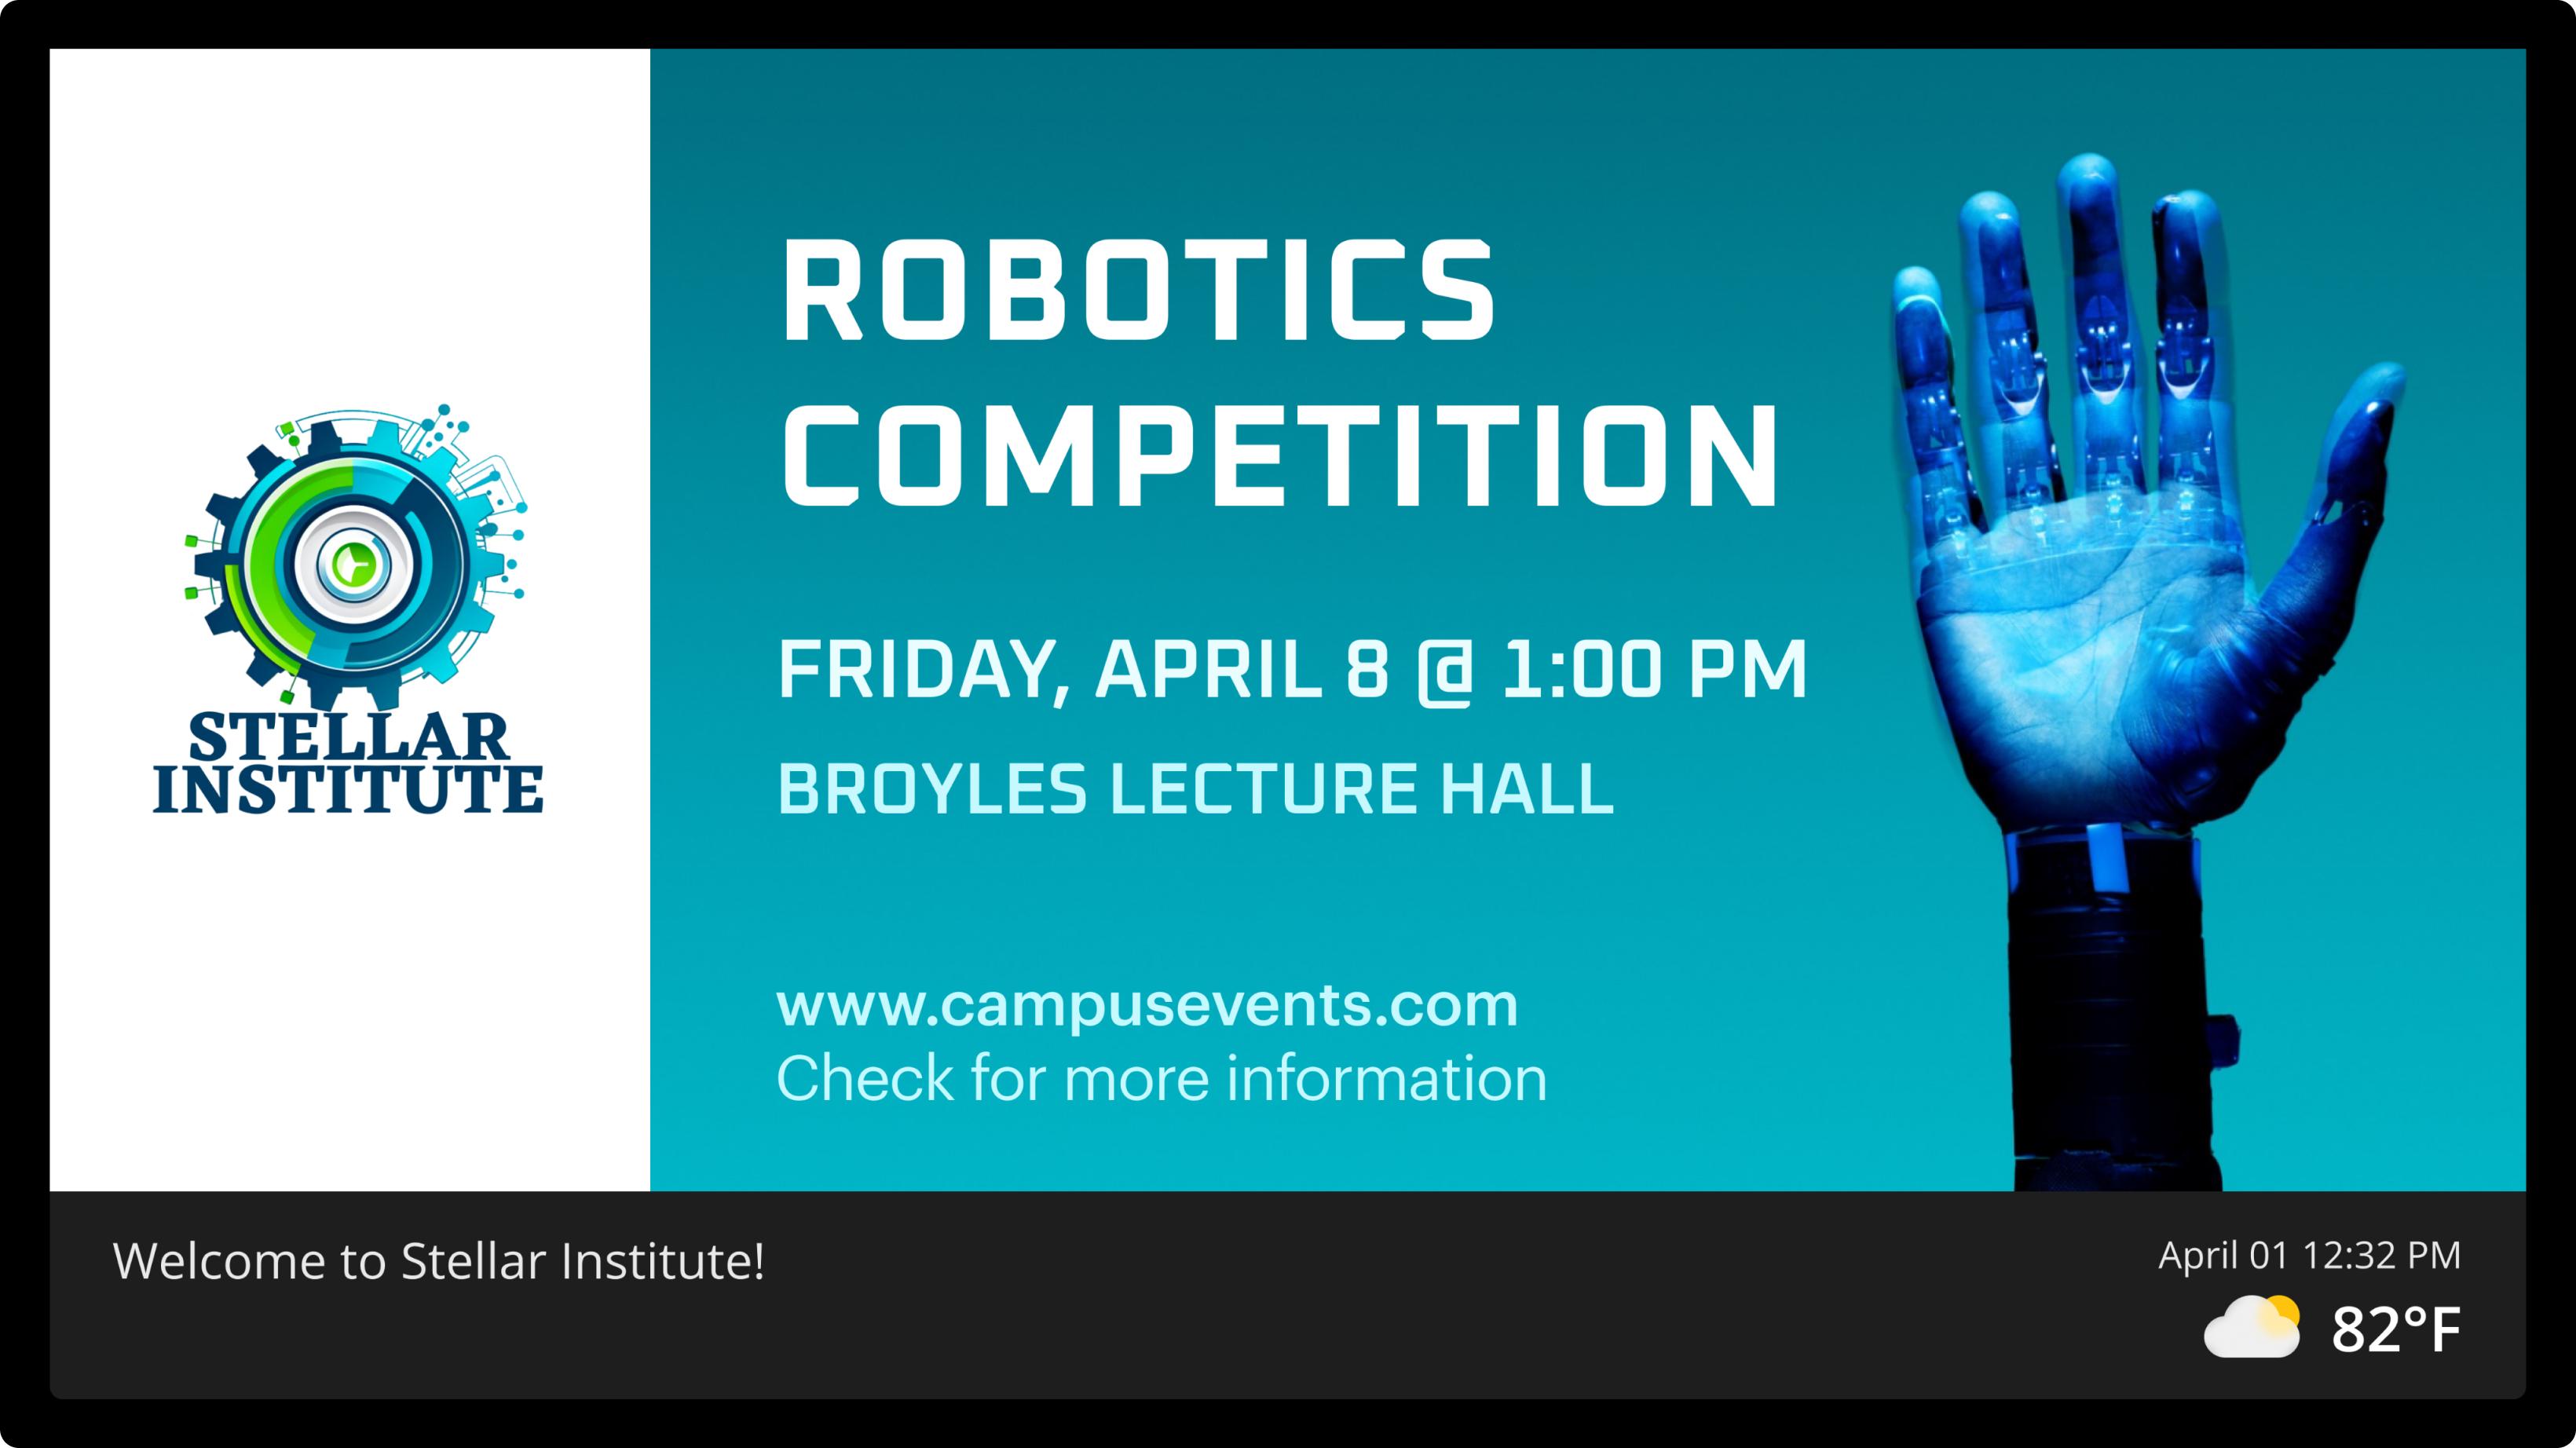 Screen example: Robotics competition announcement